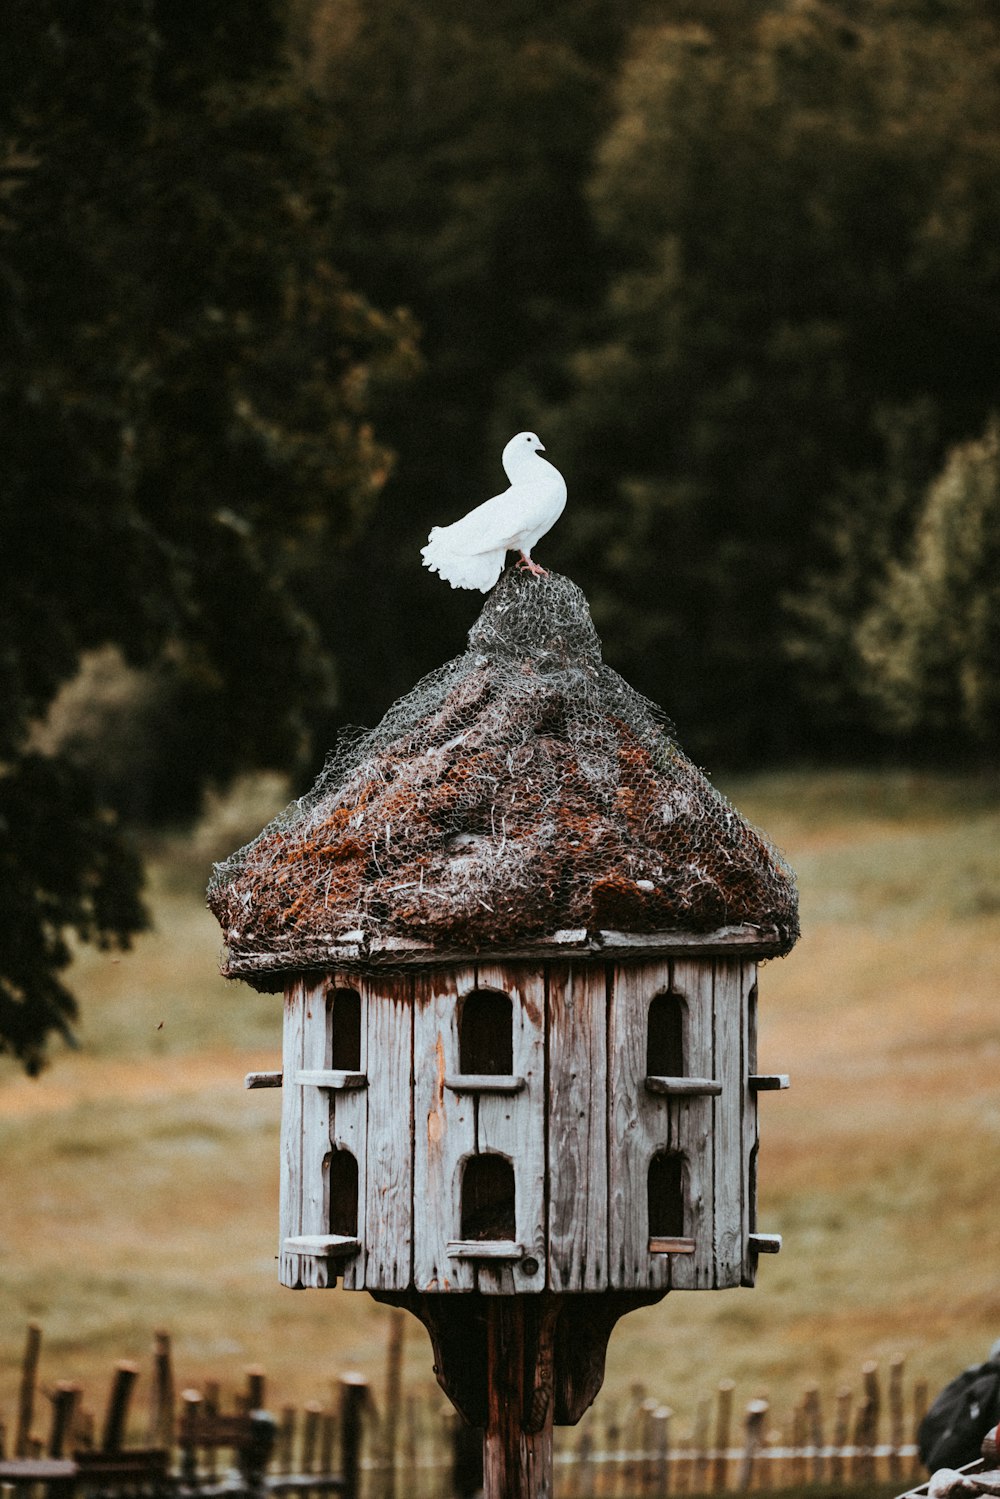 white bird flying over brown wooden bird house during daytime